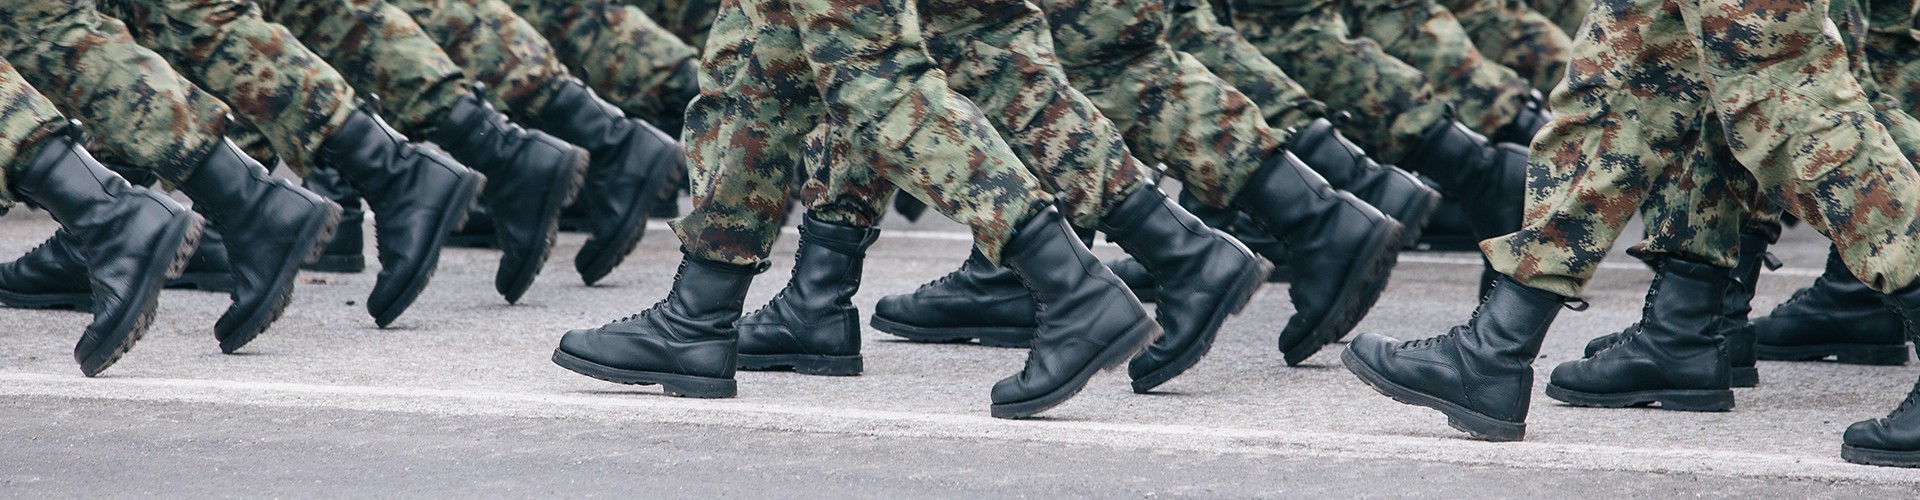 walking in army uniform